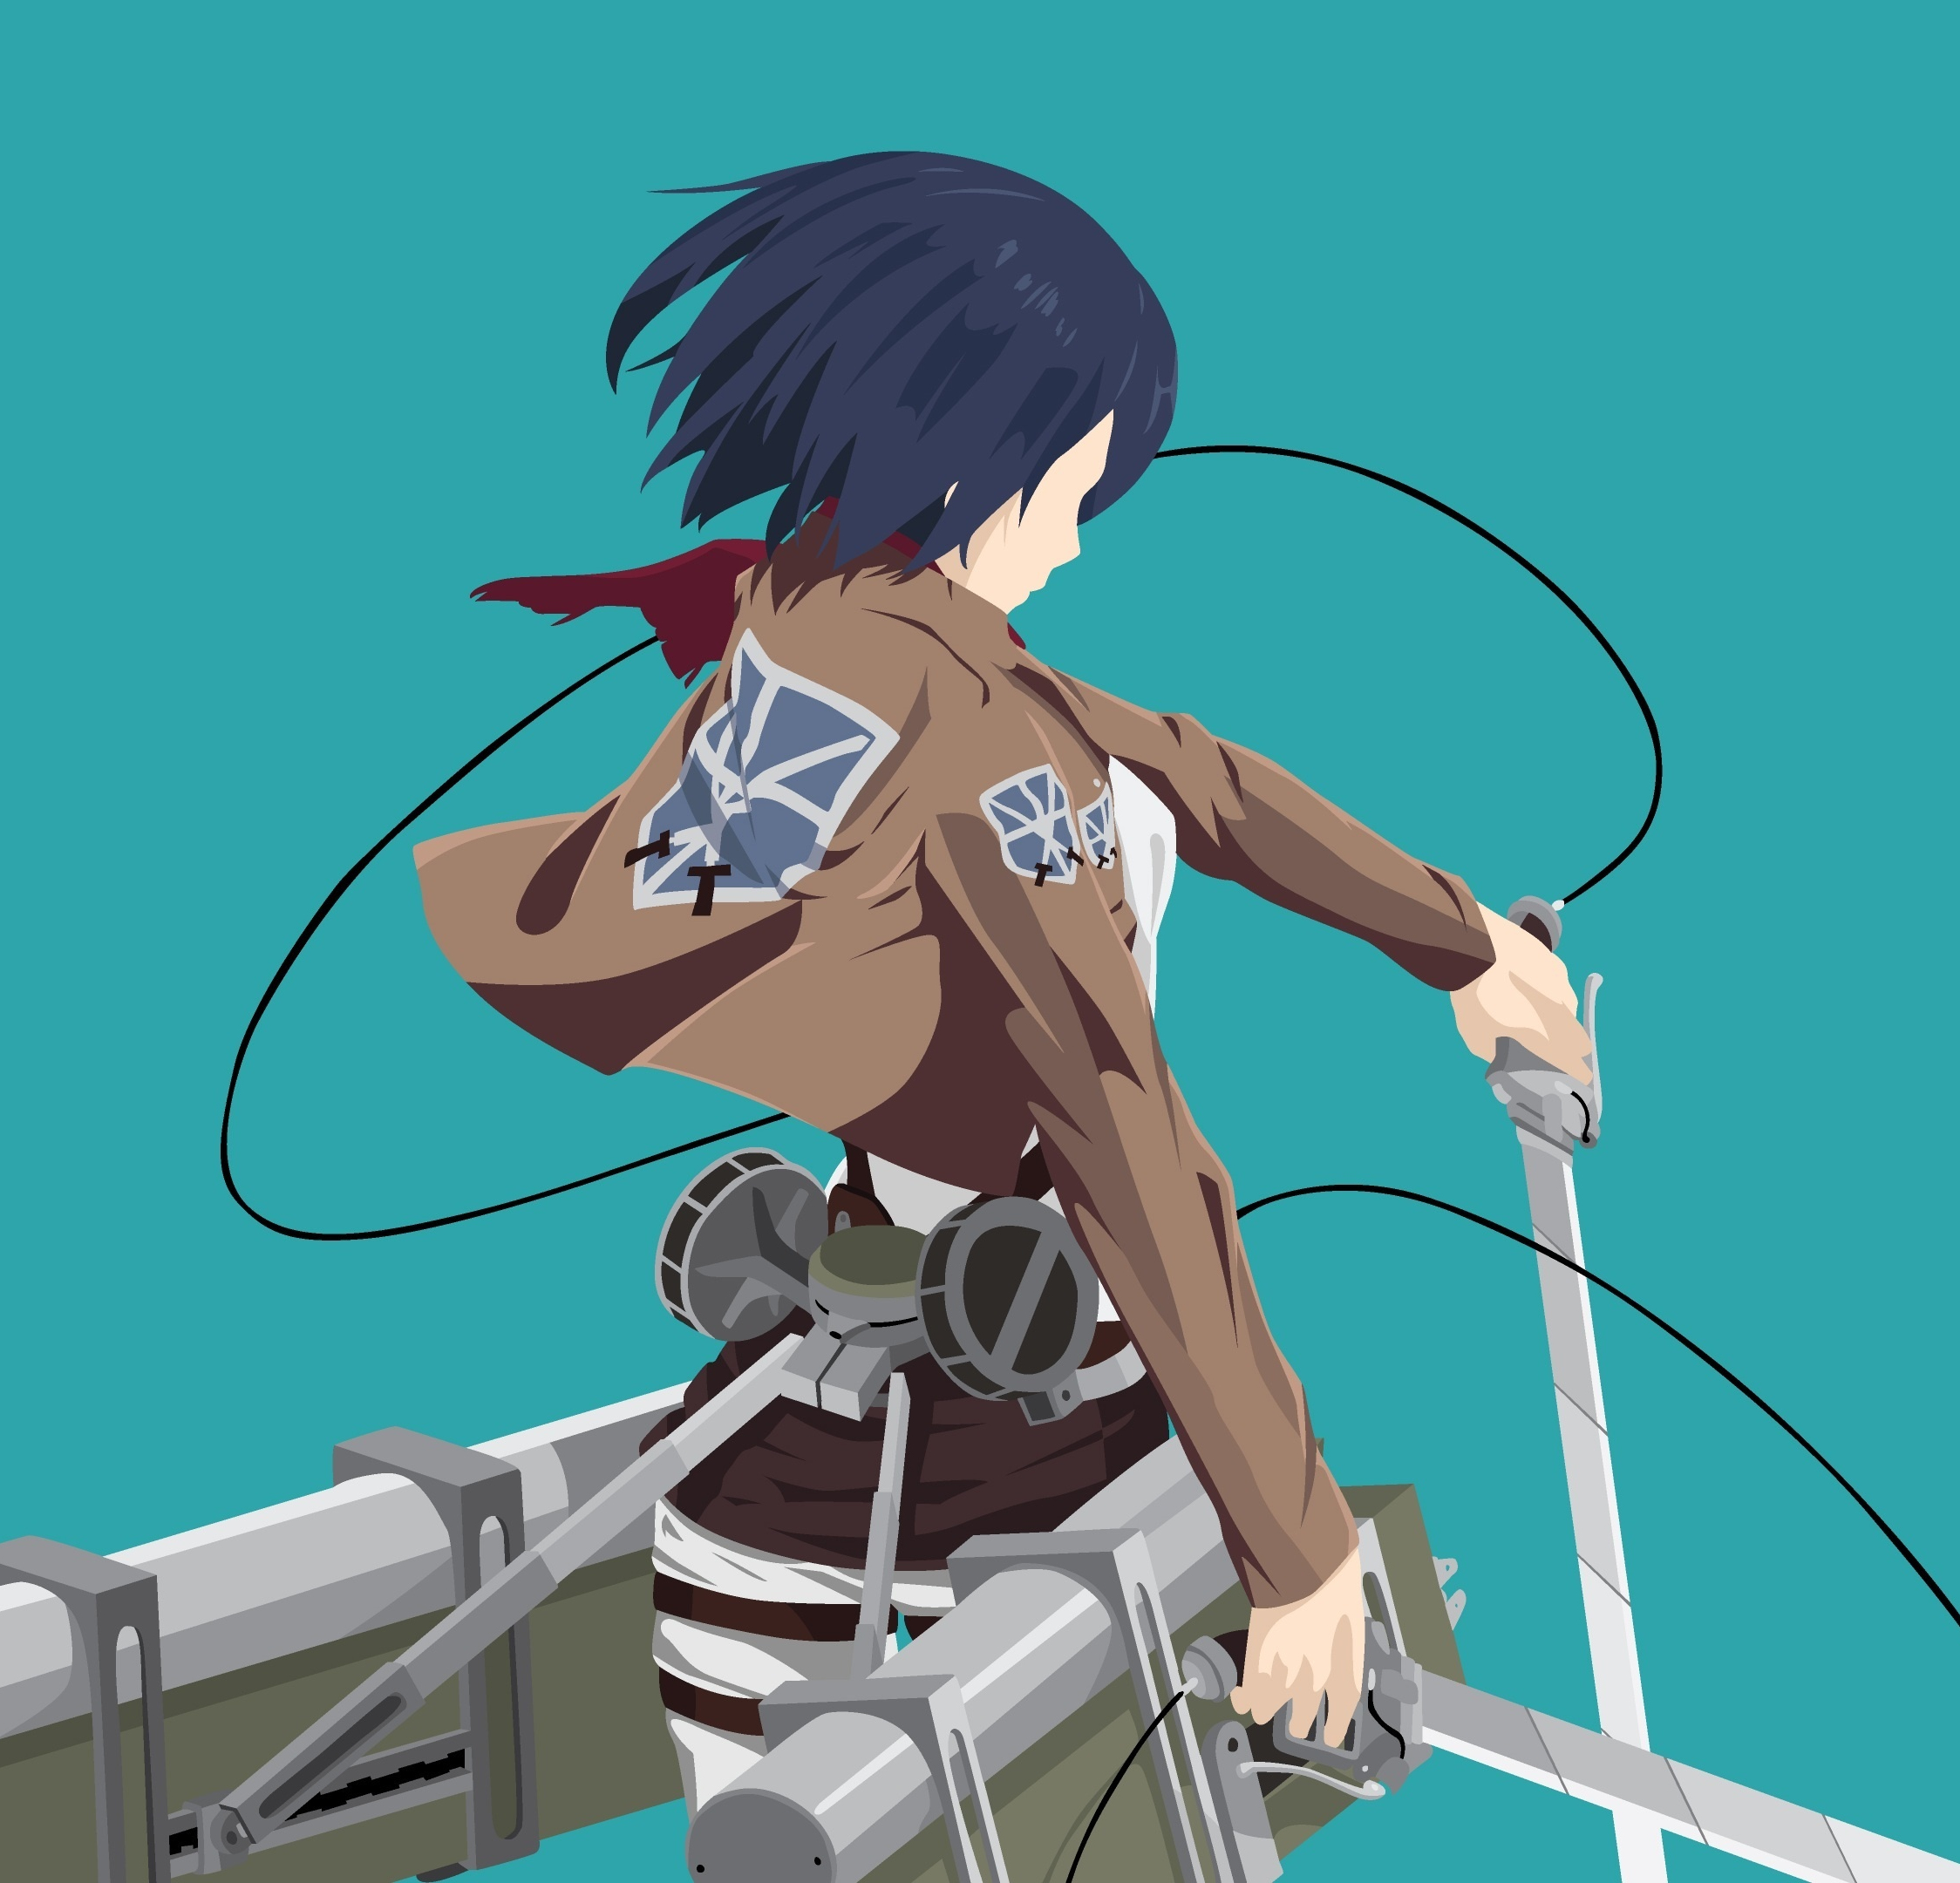 Download 2248x2248 Wallpaper Anime Girl Mikasa Ackerman Minimal Ipad Air Ipad Air 2 Ipad 3 Ipad 4 Ipad Mini 2 Ipad Mini 3 2248x2248 Hd Image Background 4075